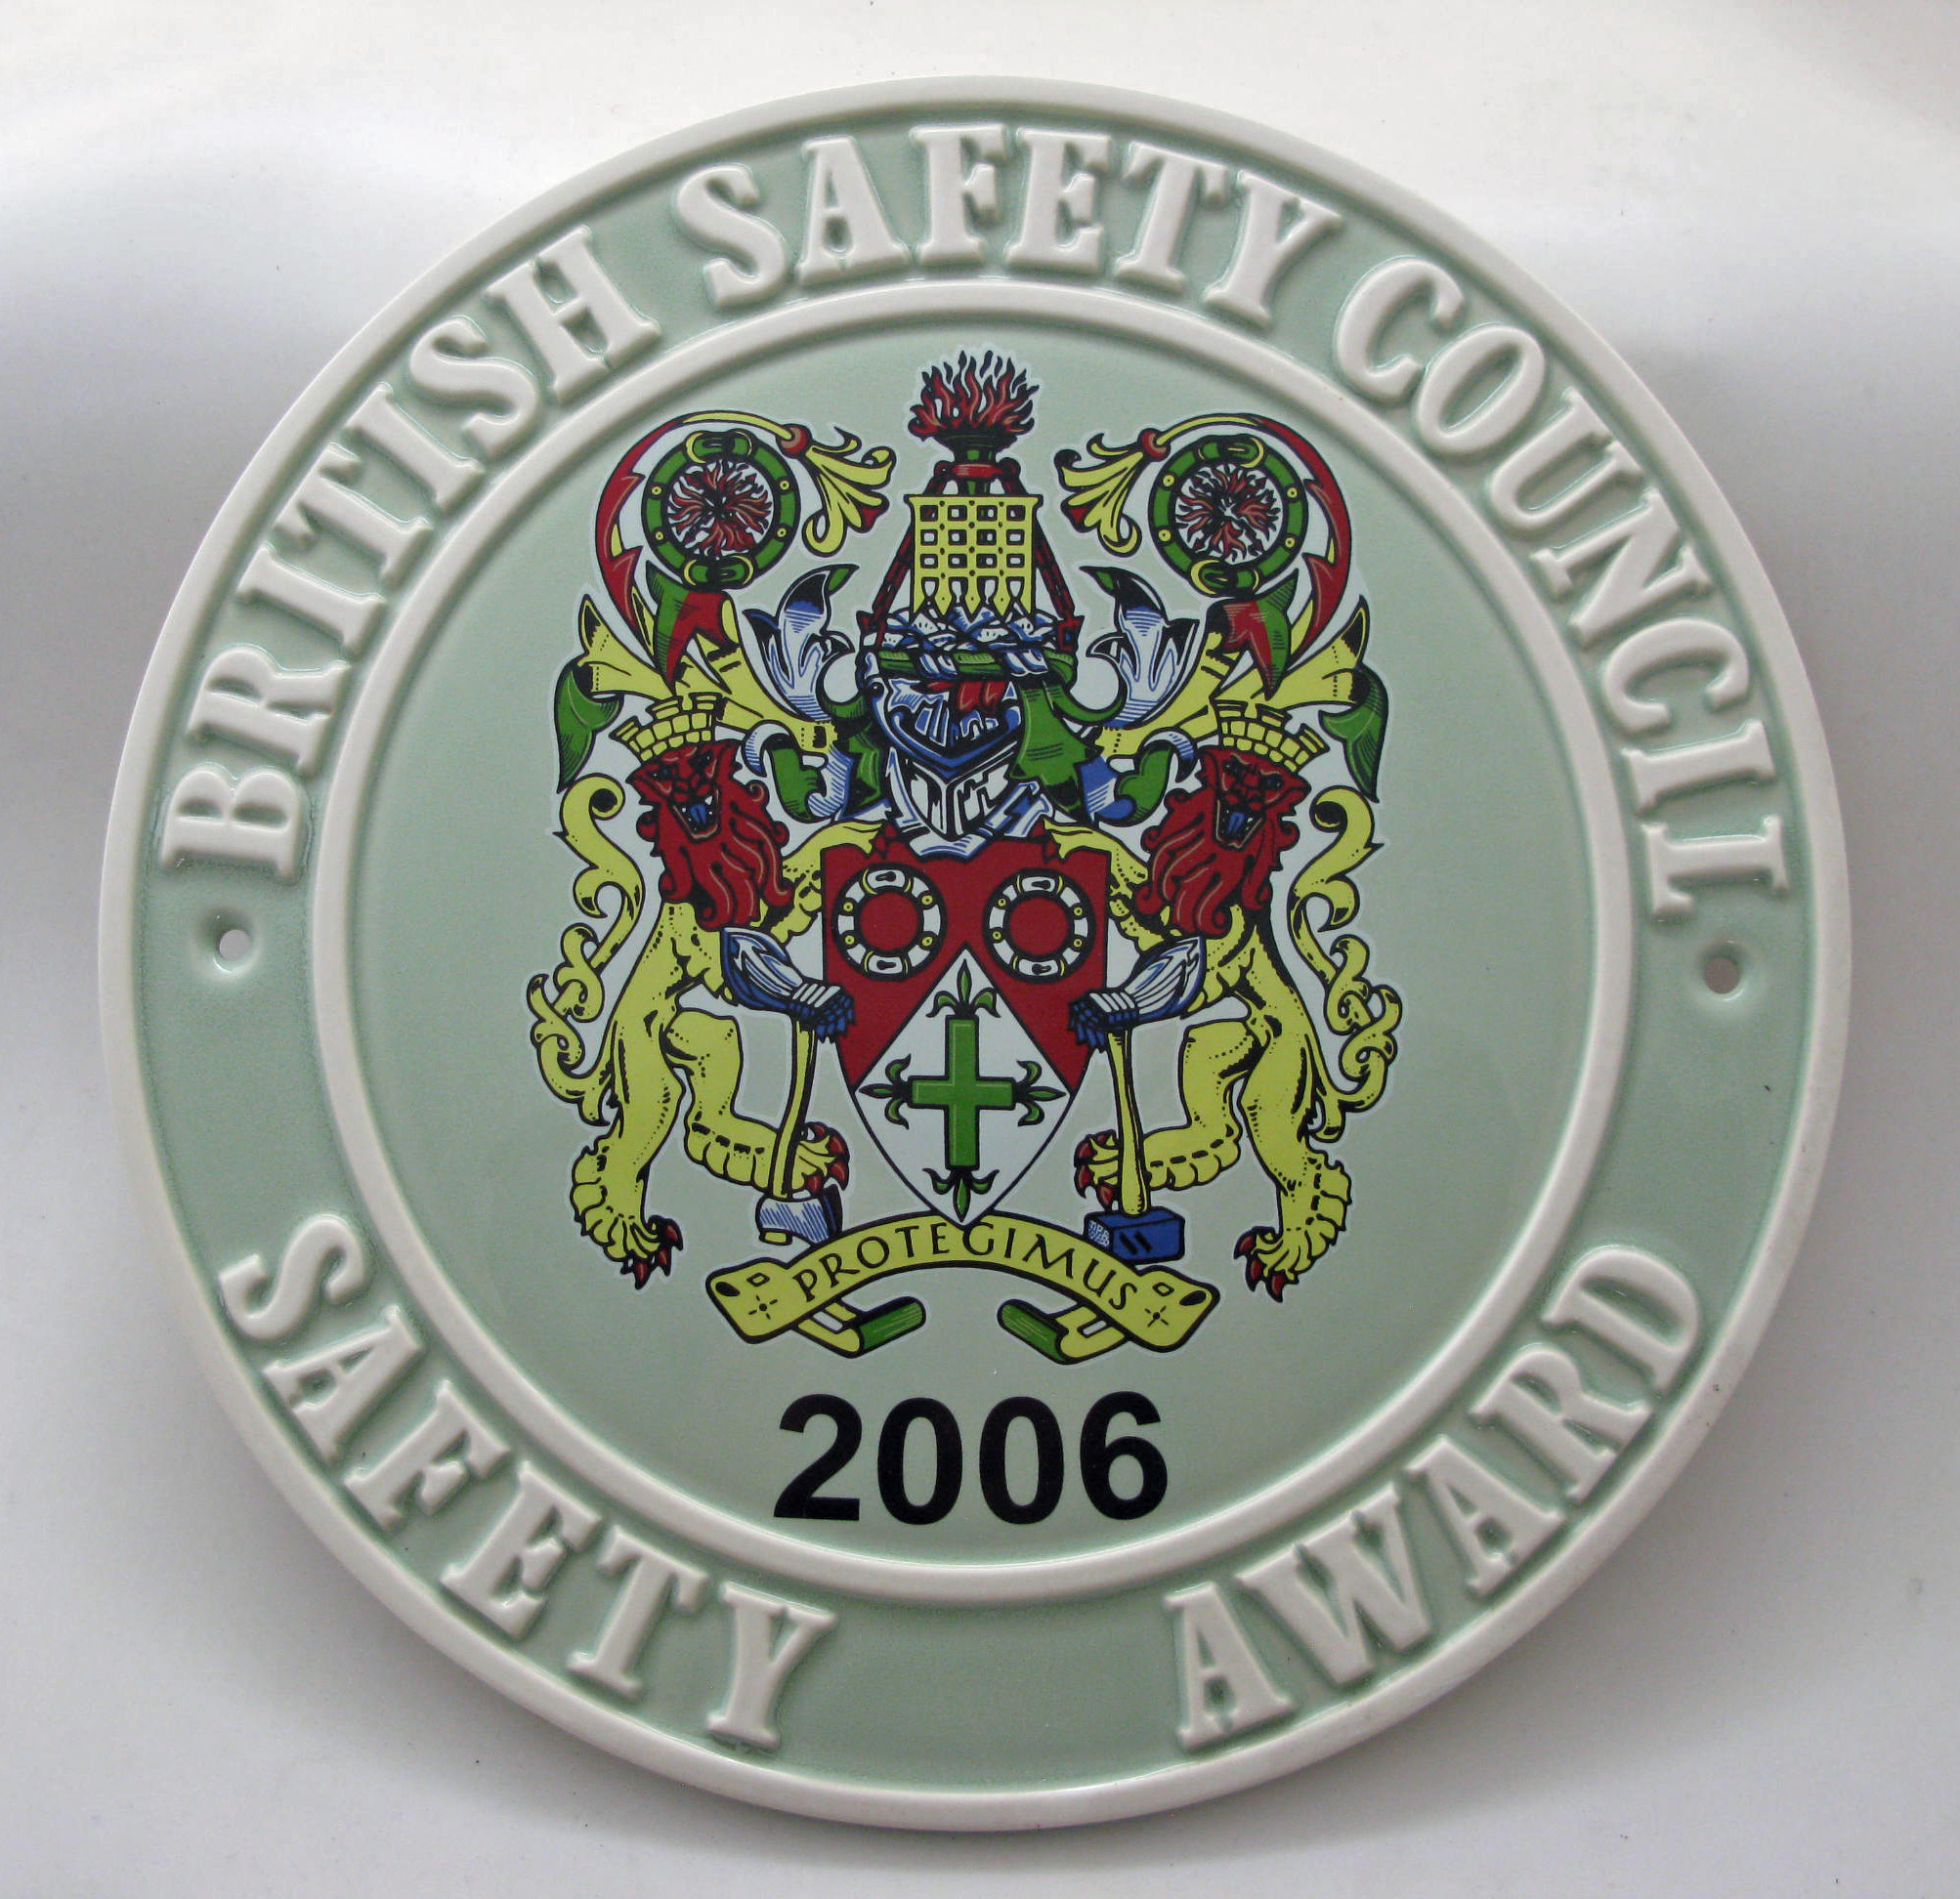 2006 Safety Award Plaque